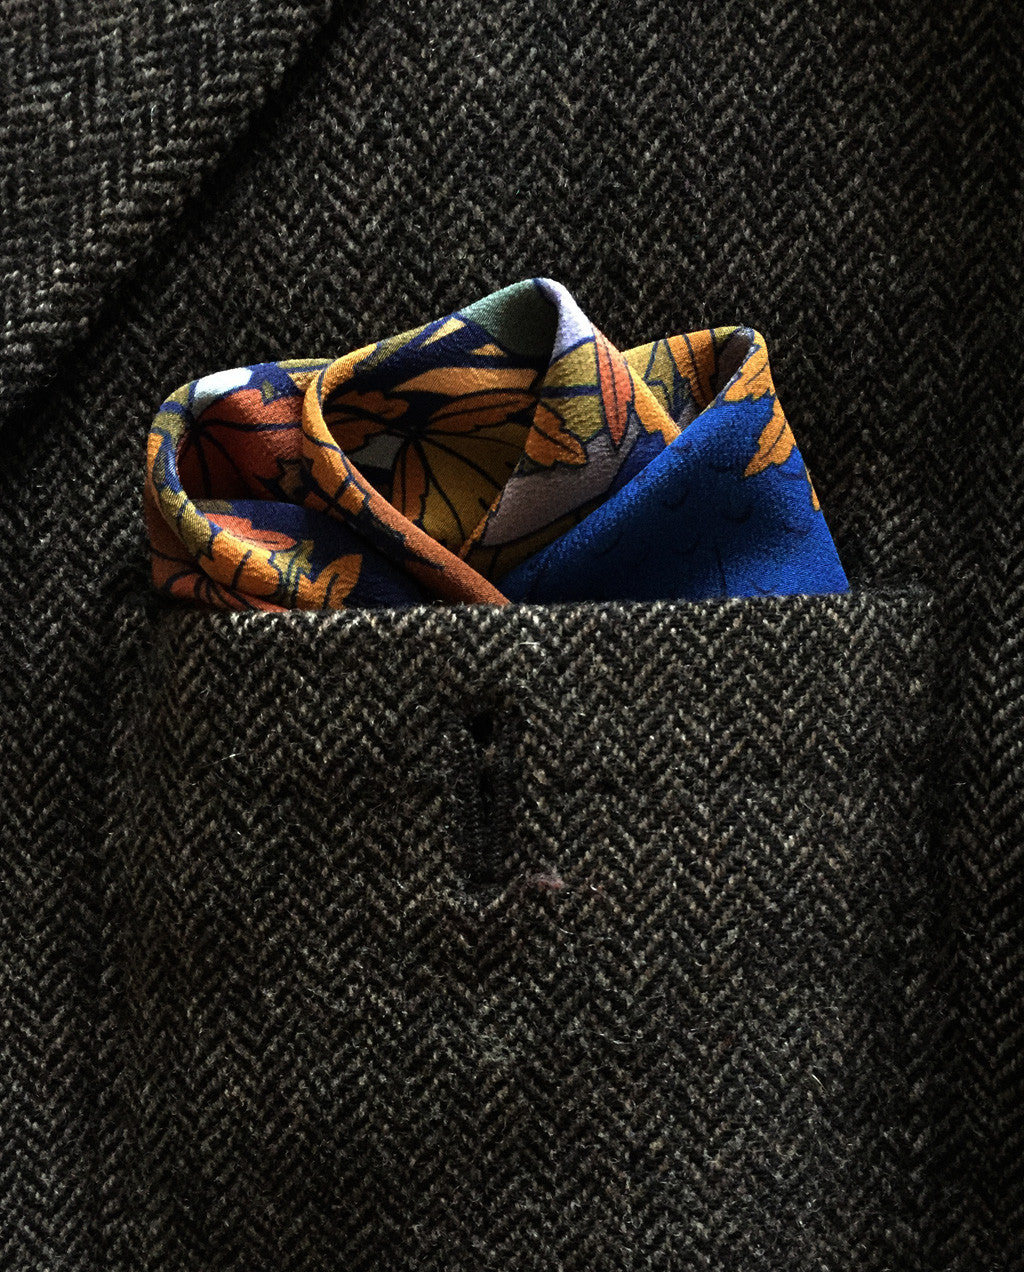 Gentlemans Pocket Square, Pocket Squares UK, Pochette, Handkerchief, Silk Square, Luxury Gift, Made in UK